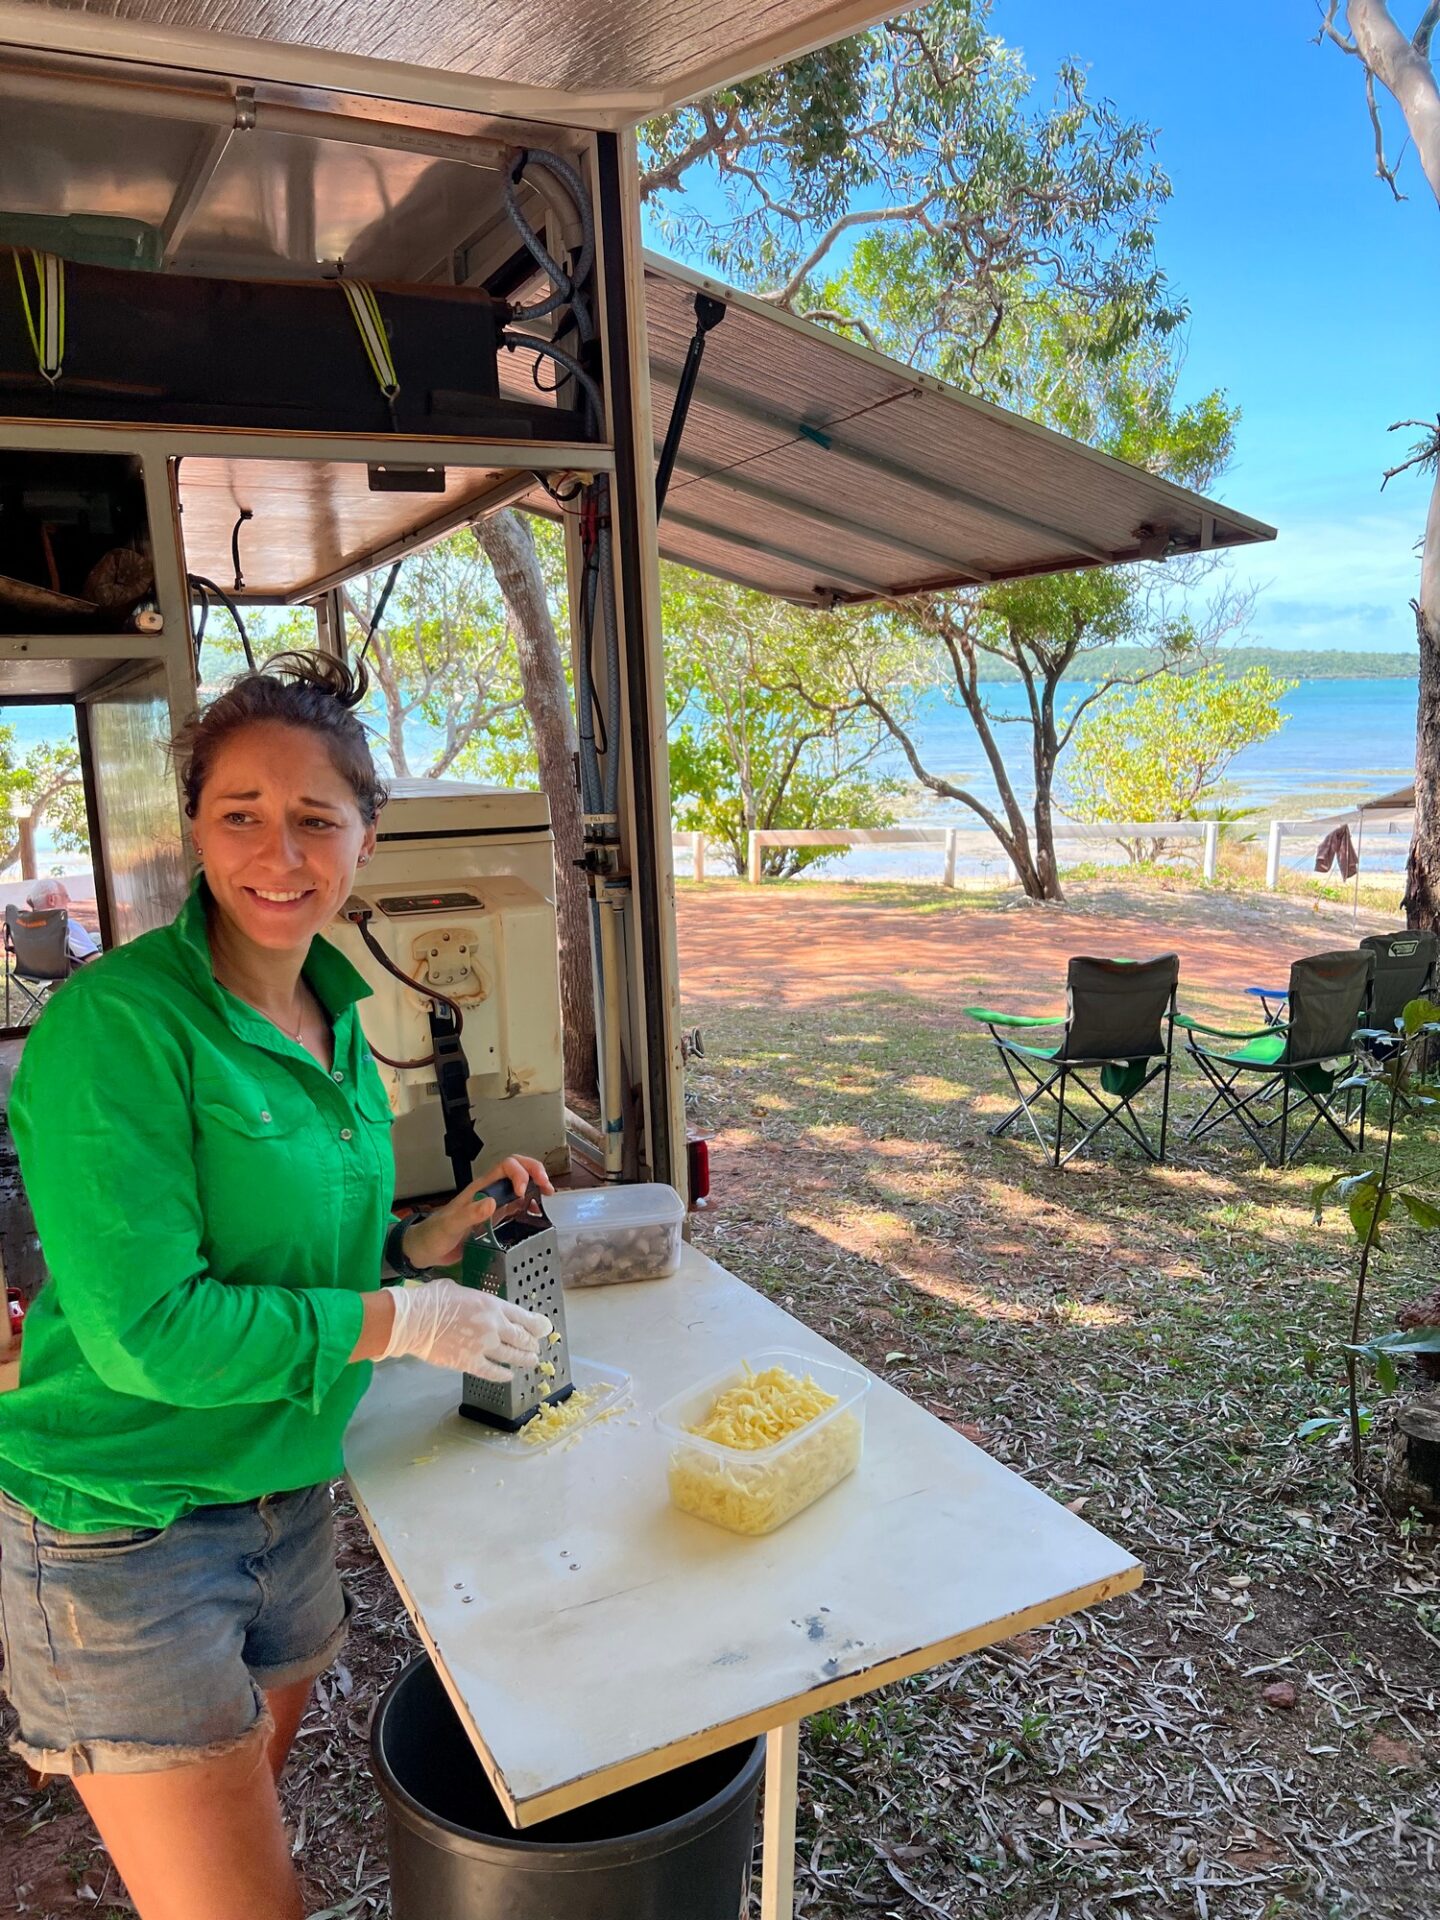 chef cooks in camp trailer in Cape York